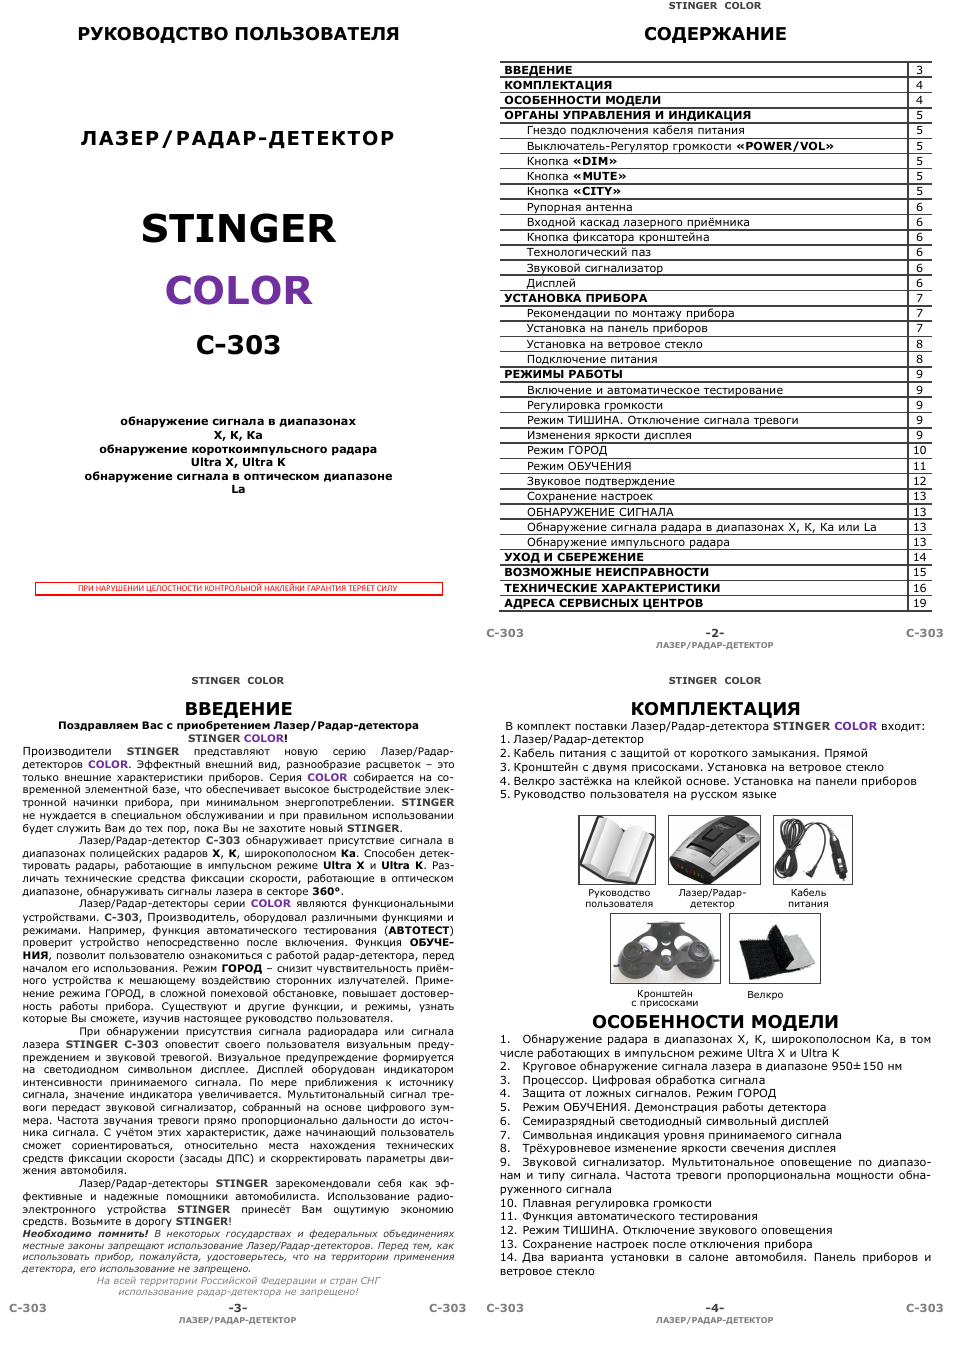 Антирадар stinger c202 инструкция